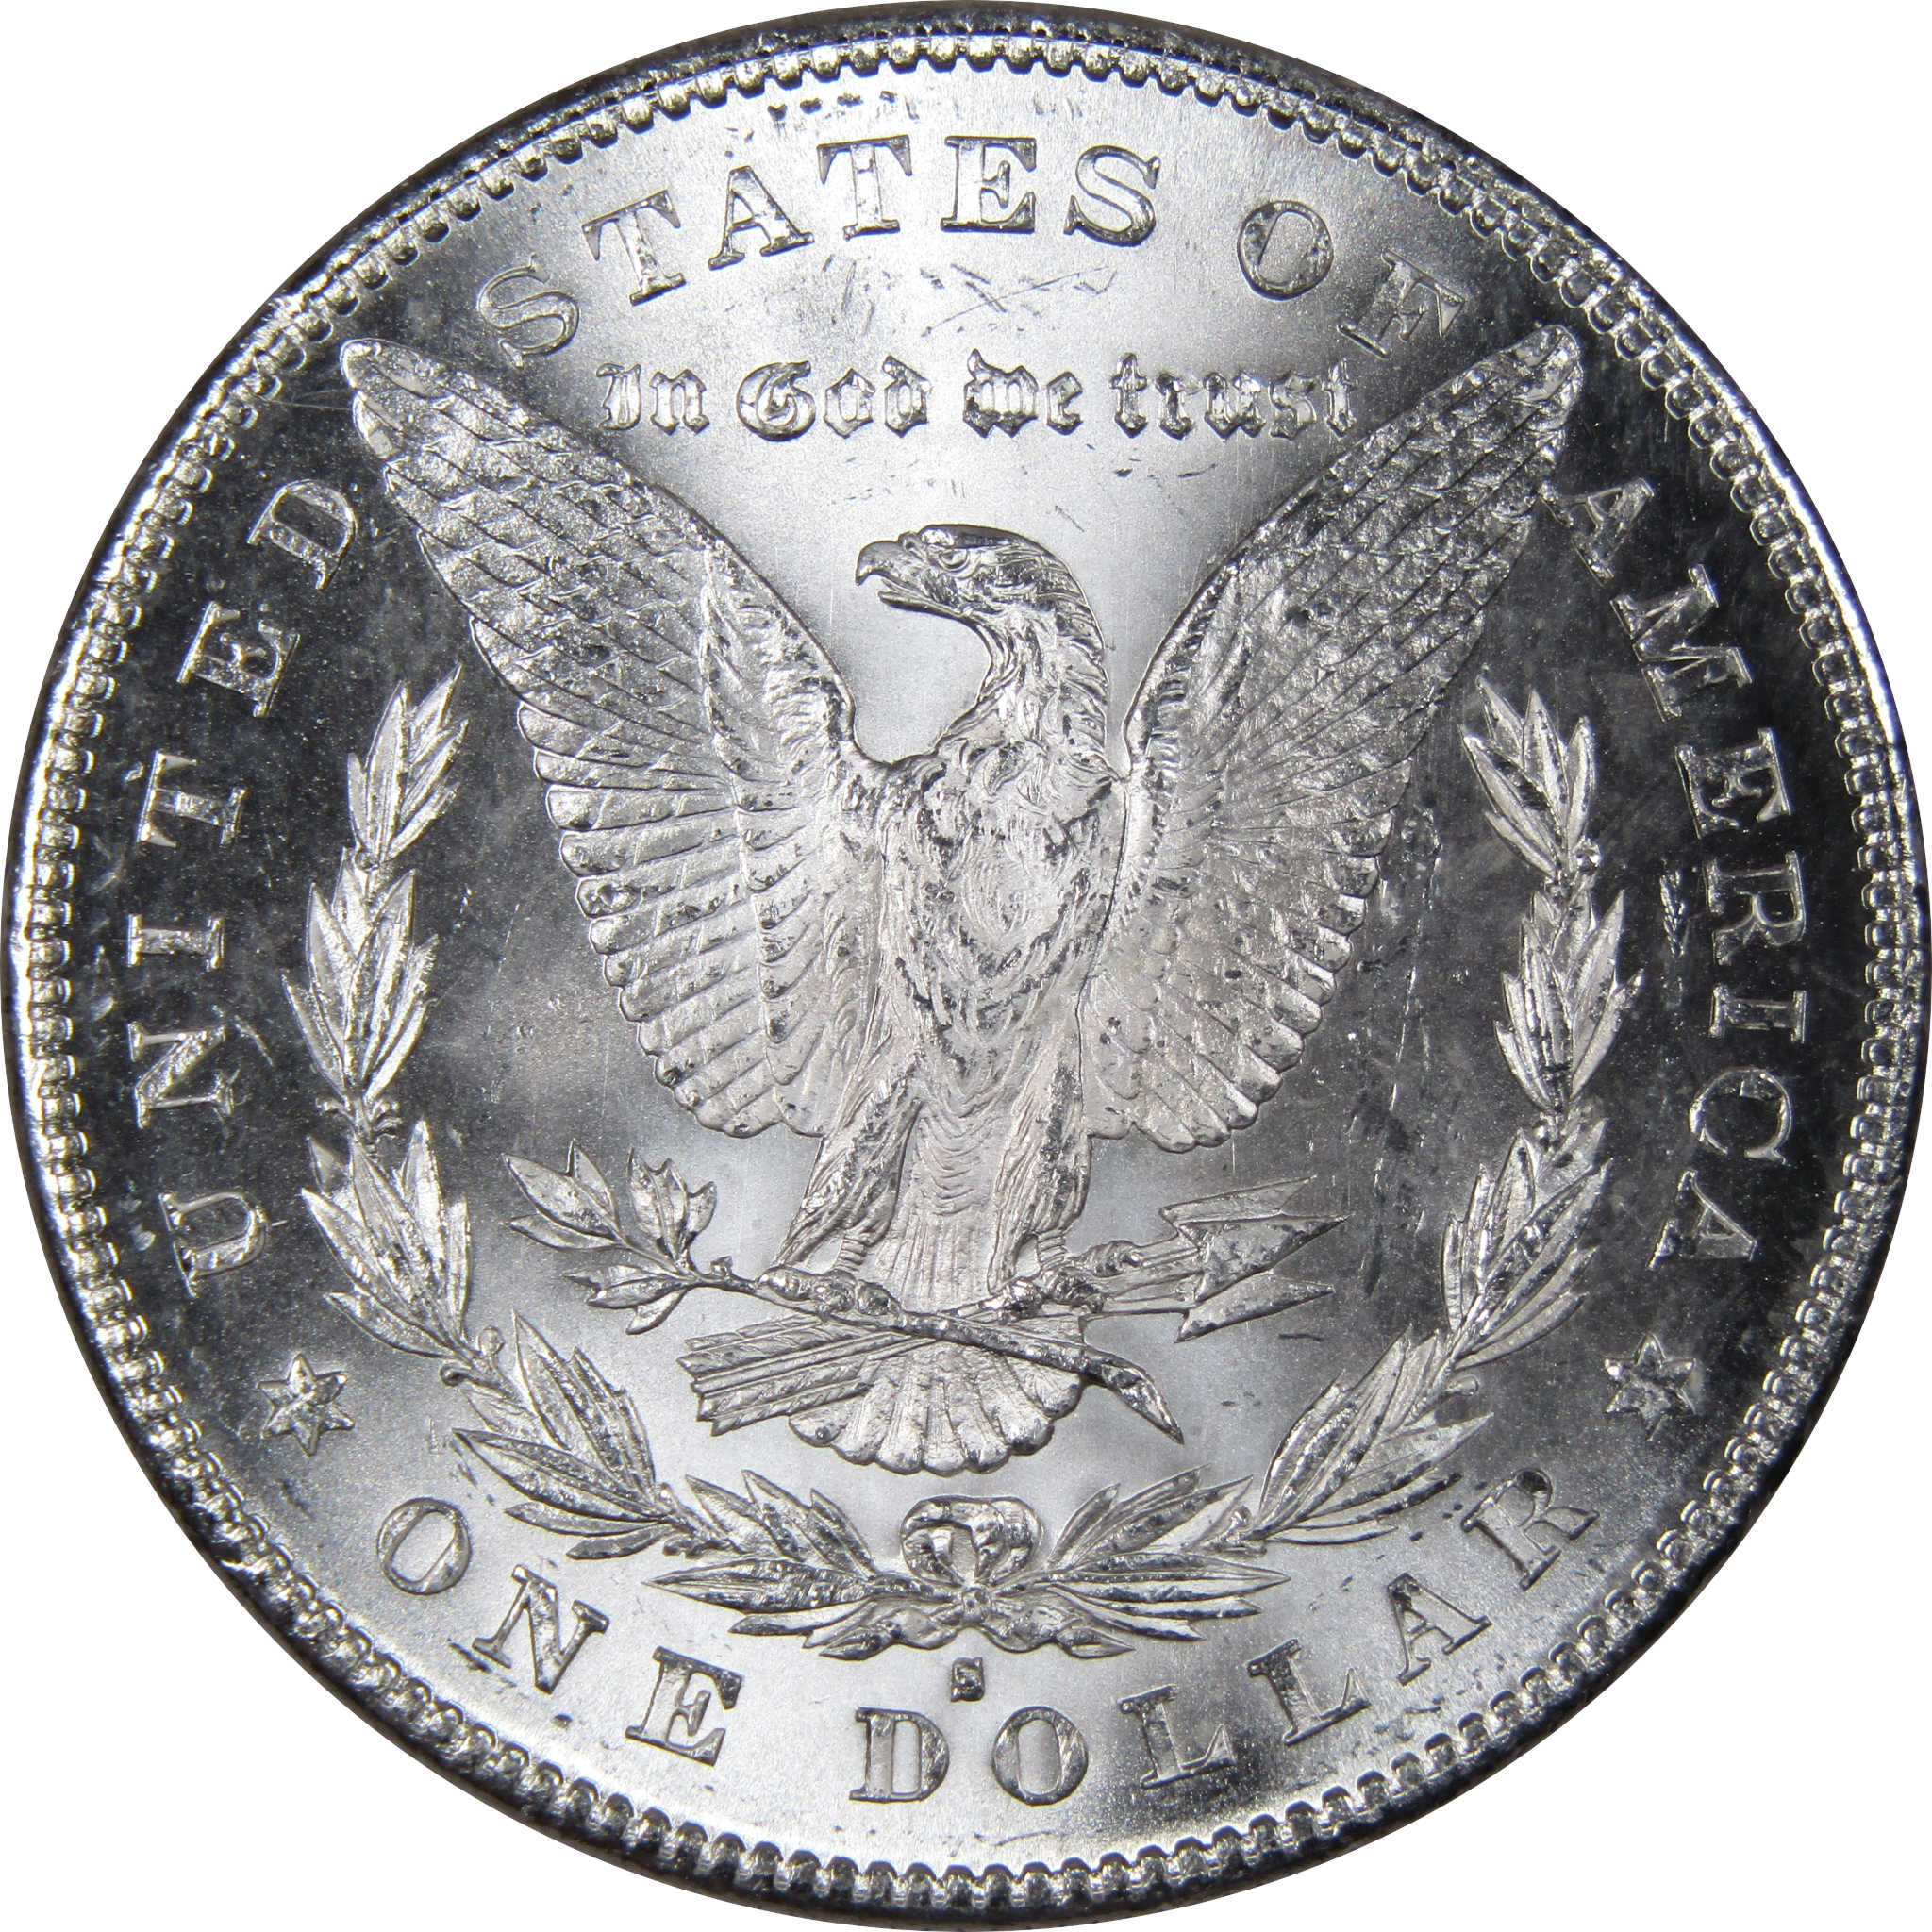 1878 S Morgan Dollar BU Uncirculated Mint State 90% Silver SKU:IPC8876 - Morgan coin - Morgan silver dollar - Morgan silver dollar for sale - Profile Coins &amp; Collectibles